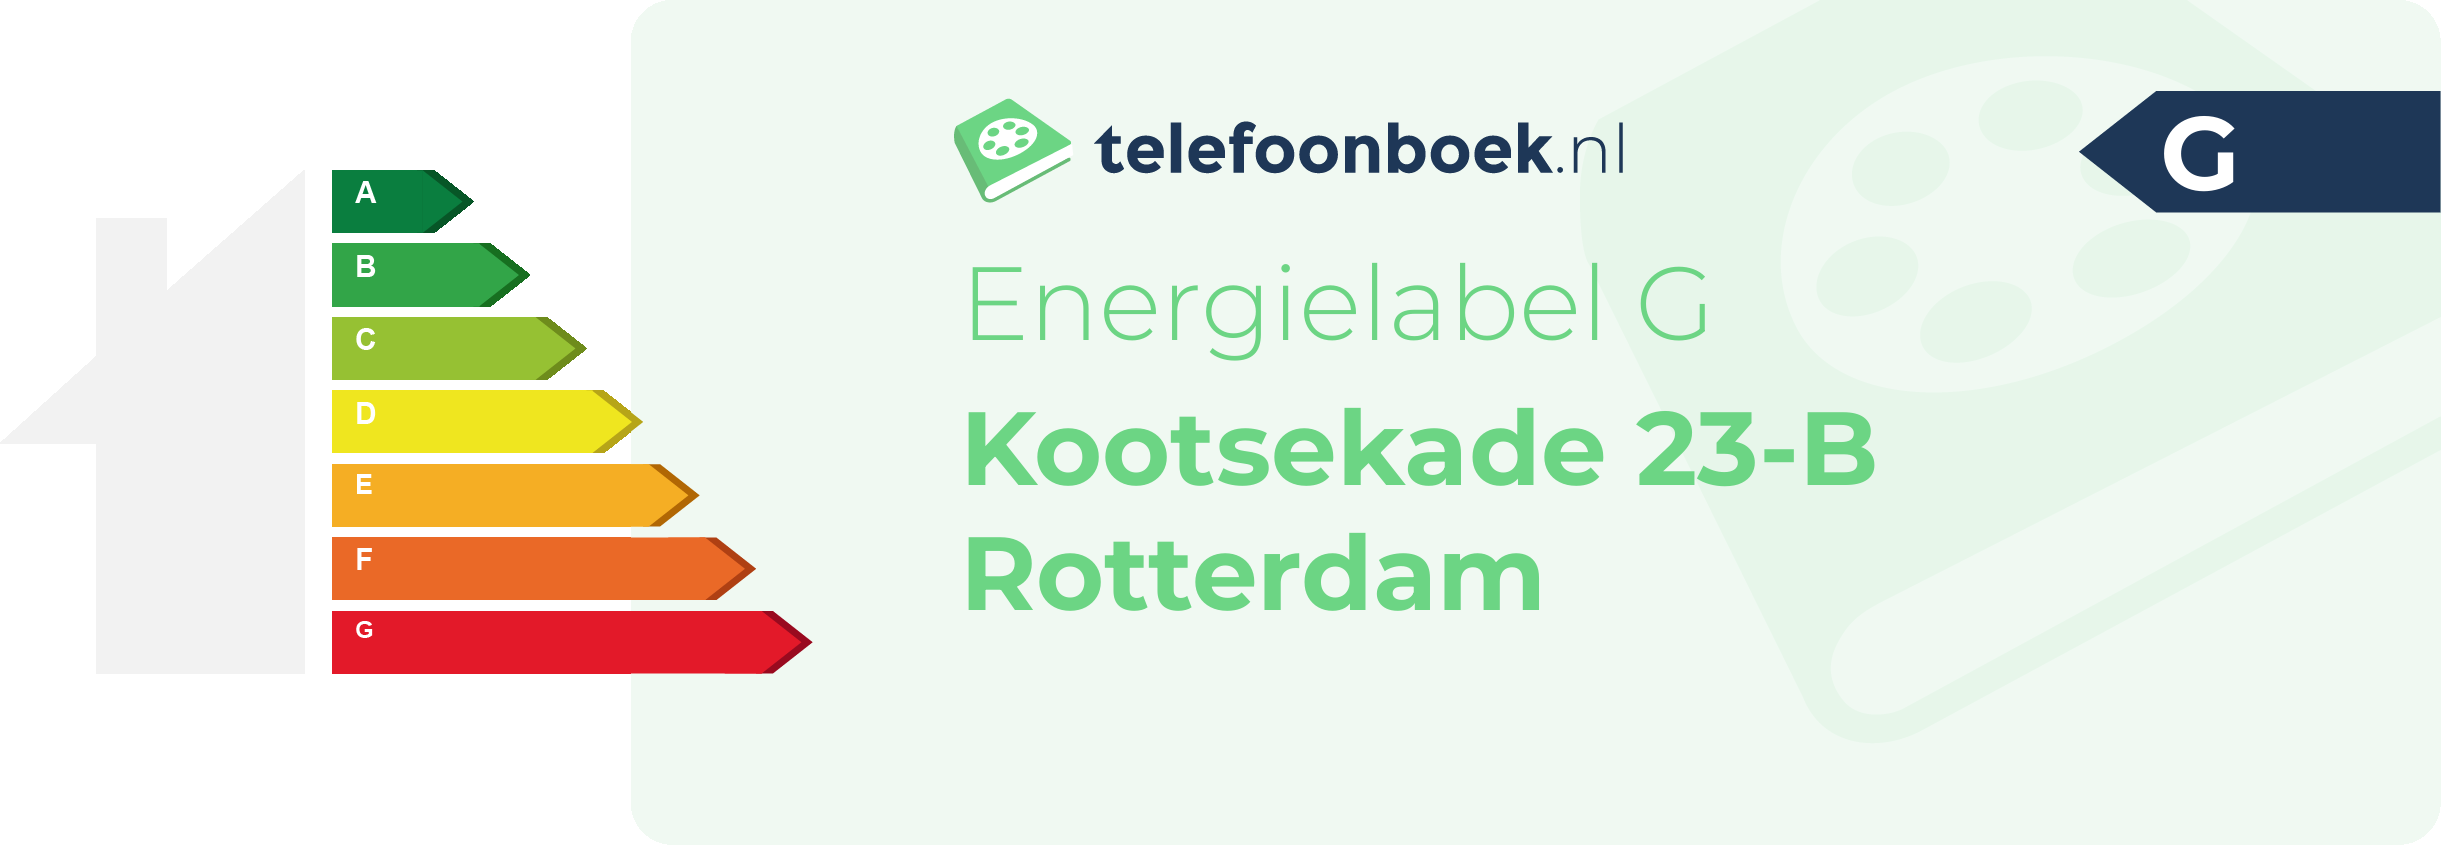 Energielabel Kootsekade 23-B Rotterdam